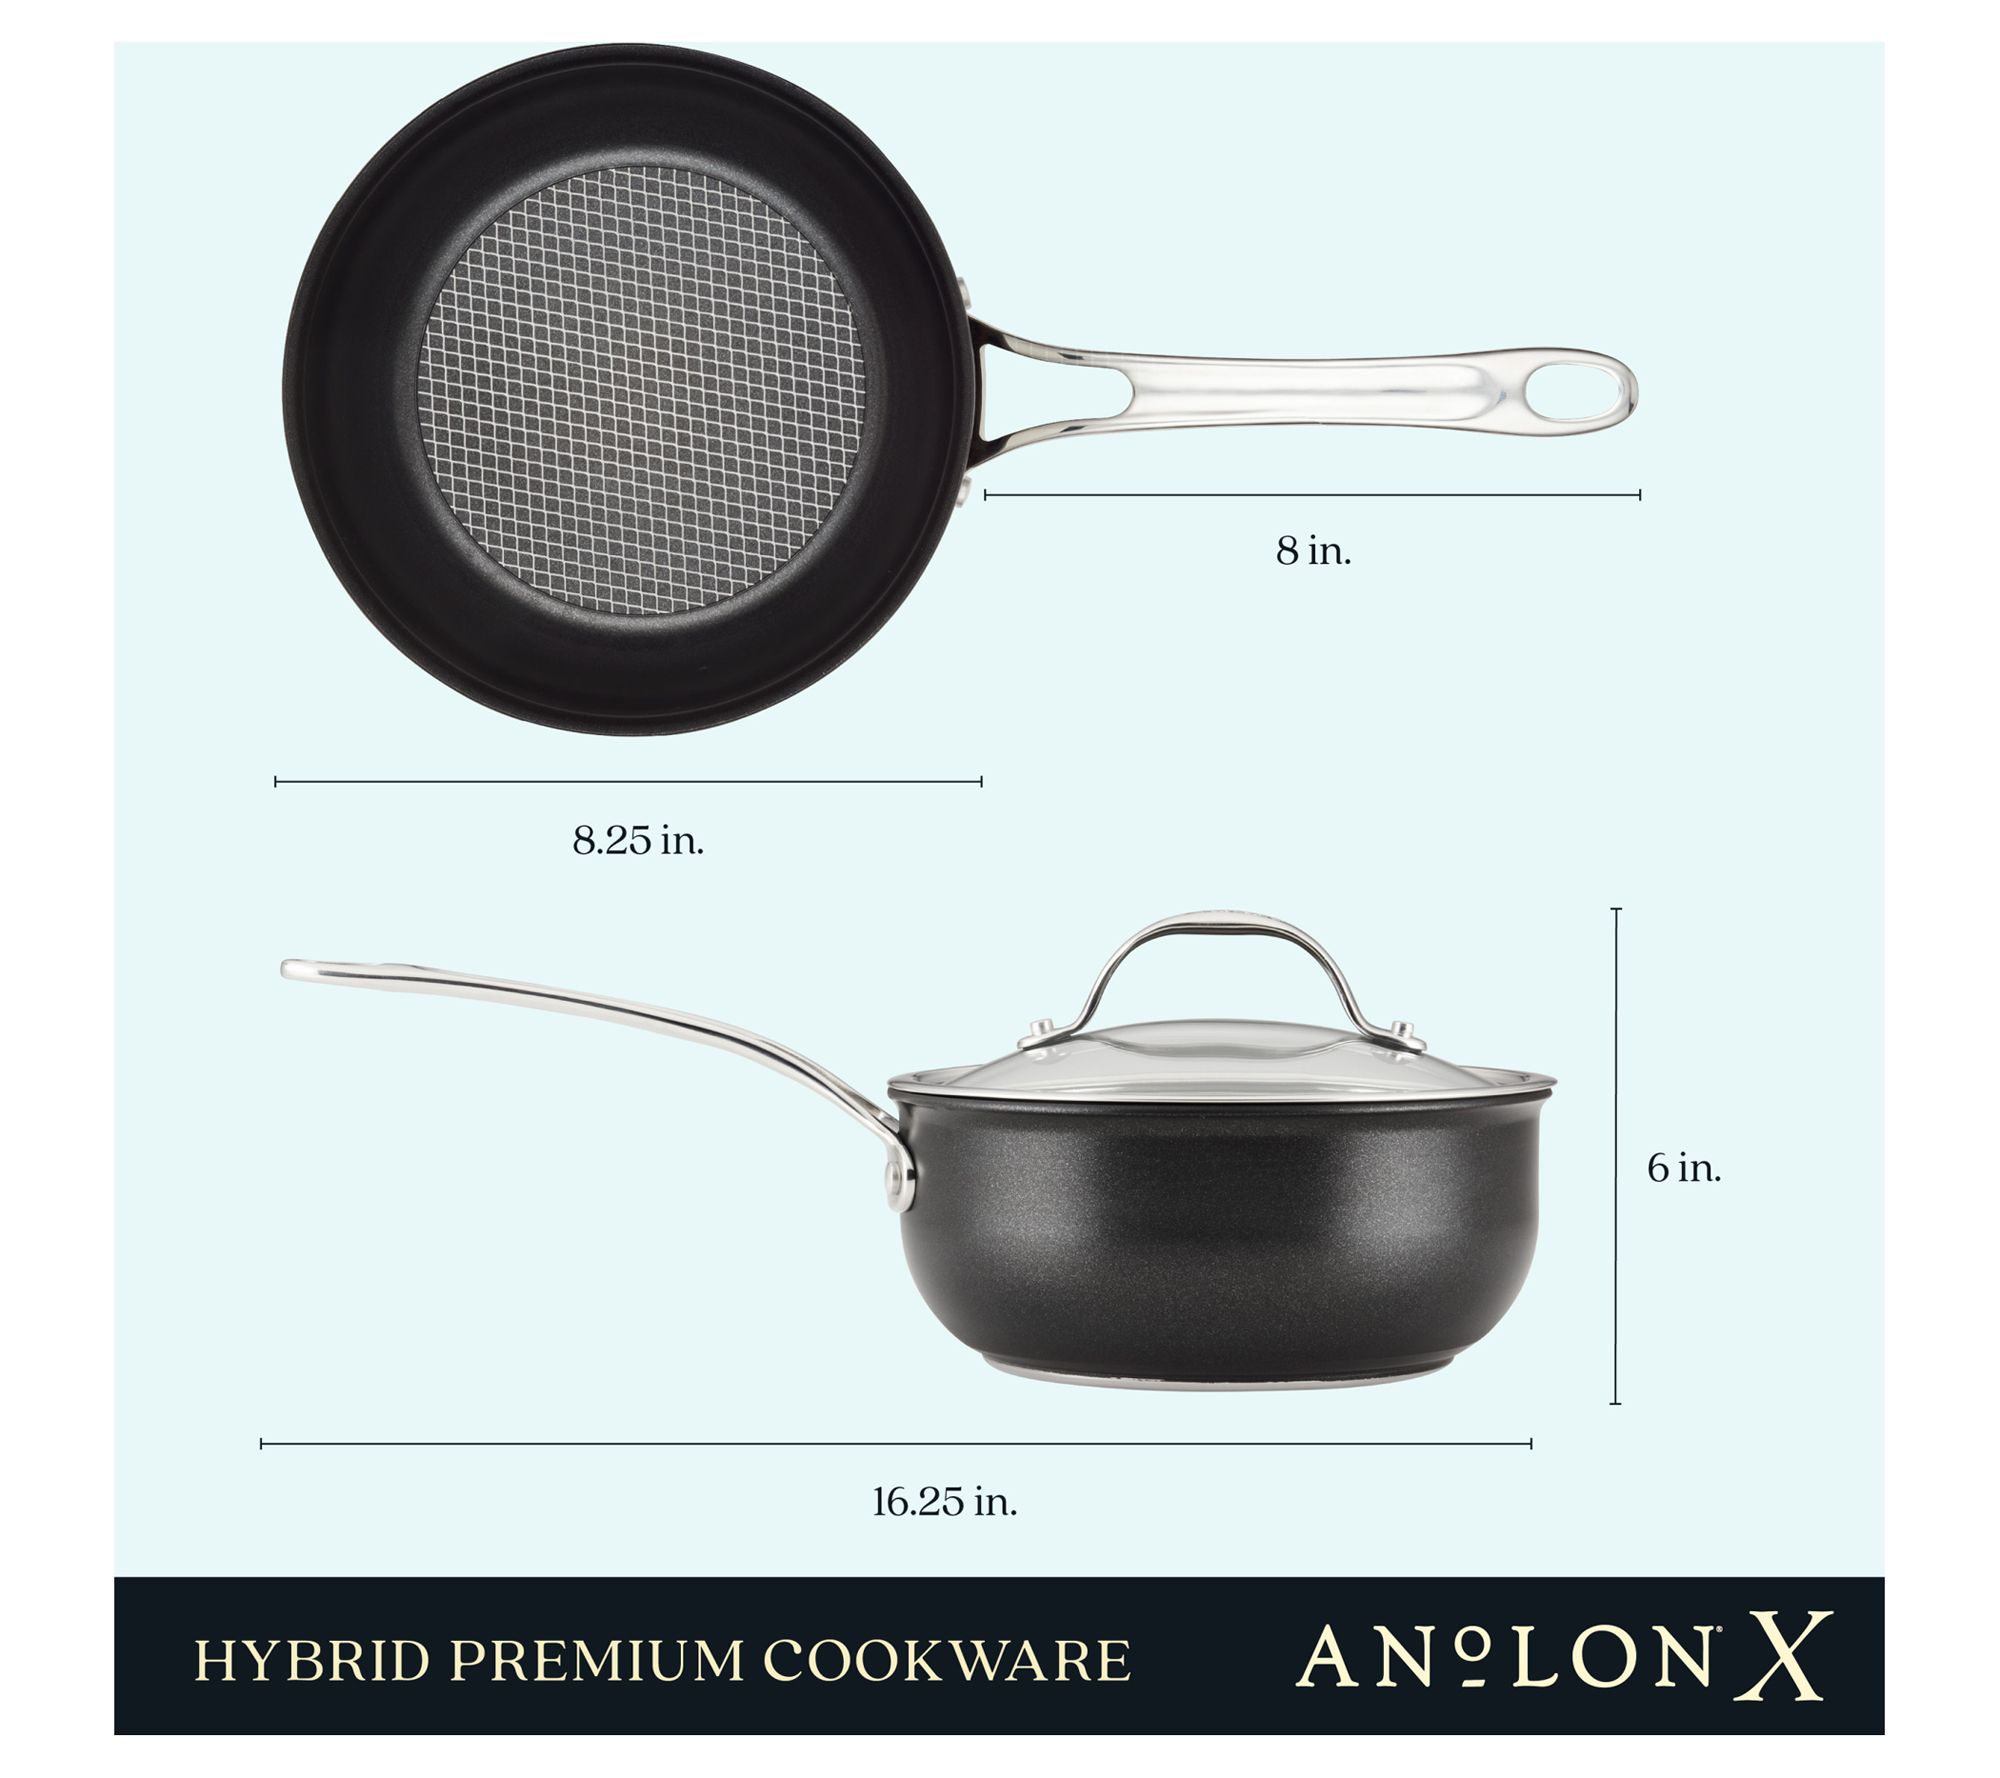 AnolonX 6pc Premium SearTech Nonstick Cookware Set